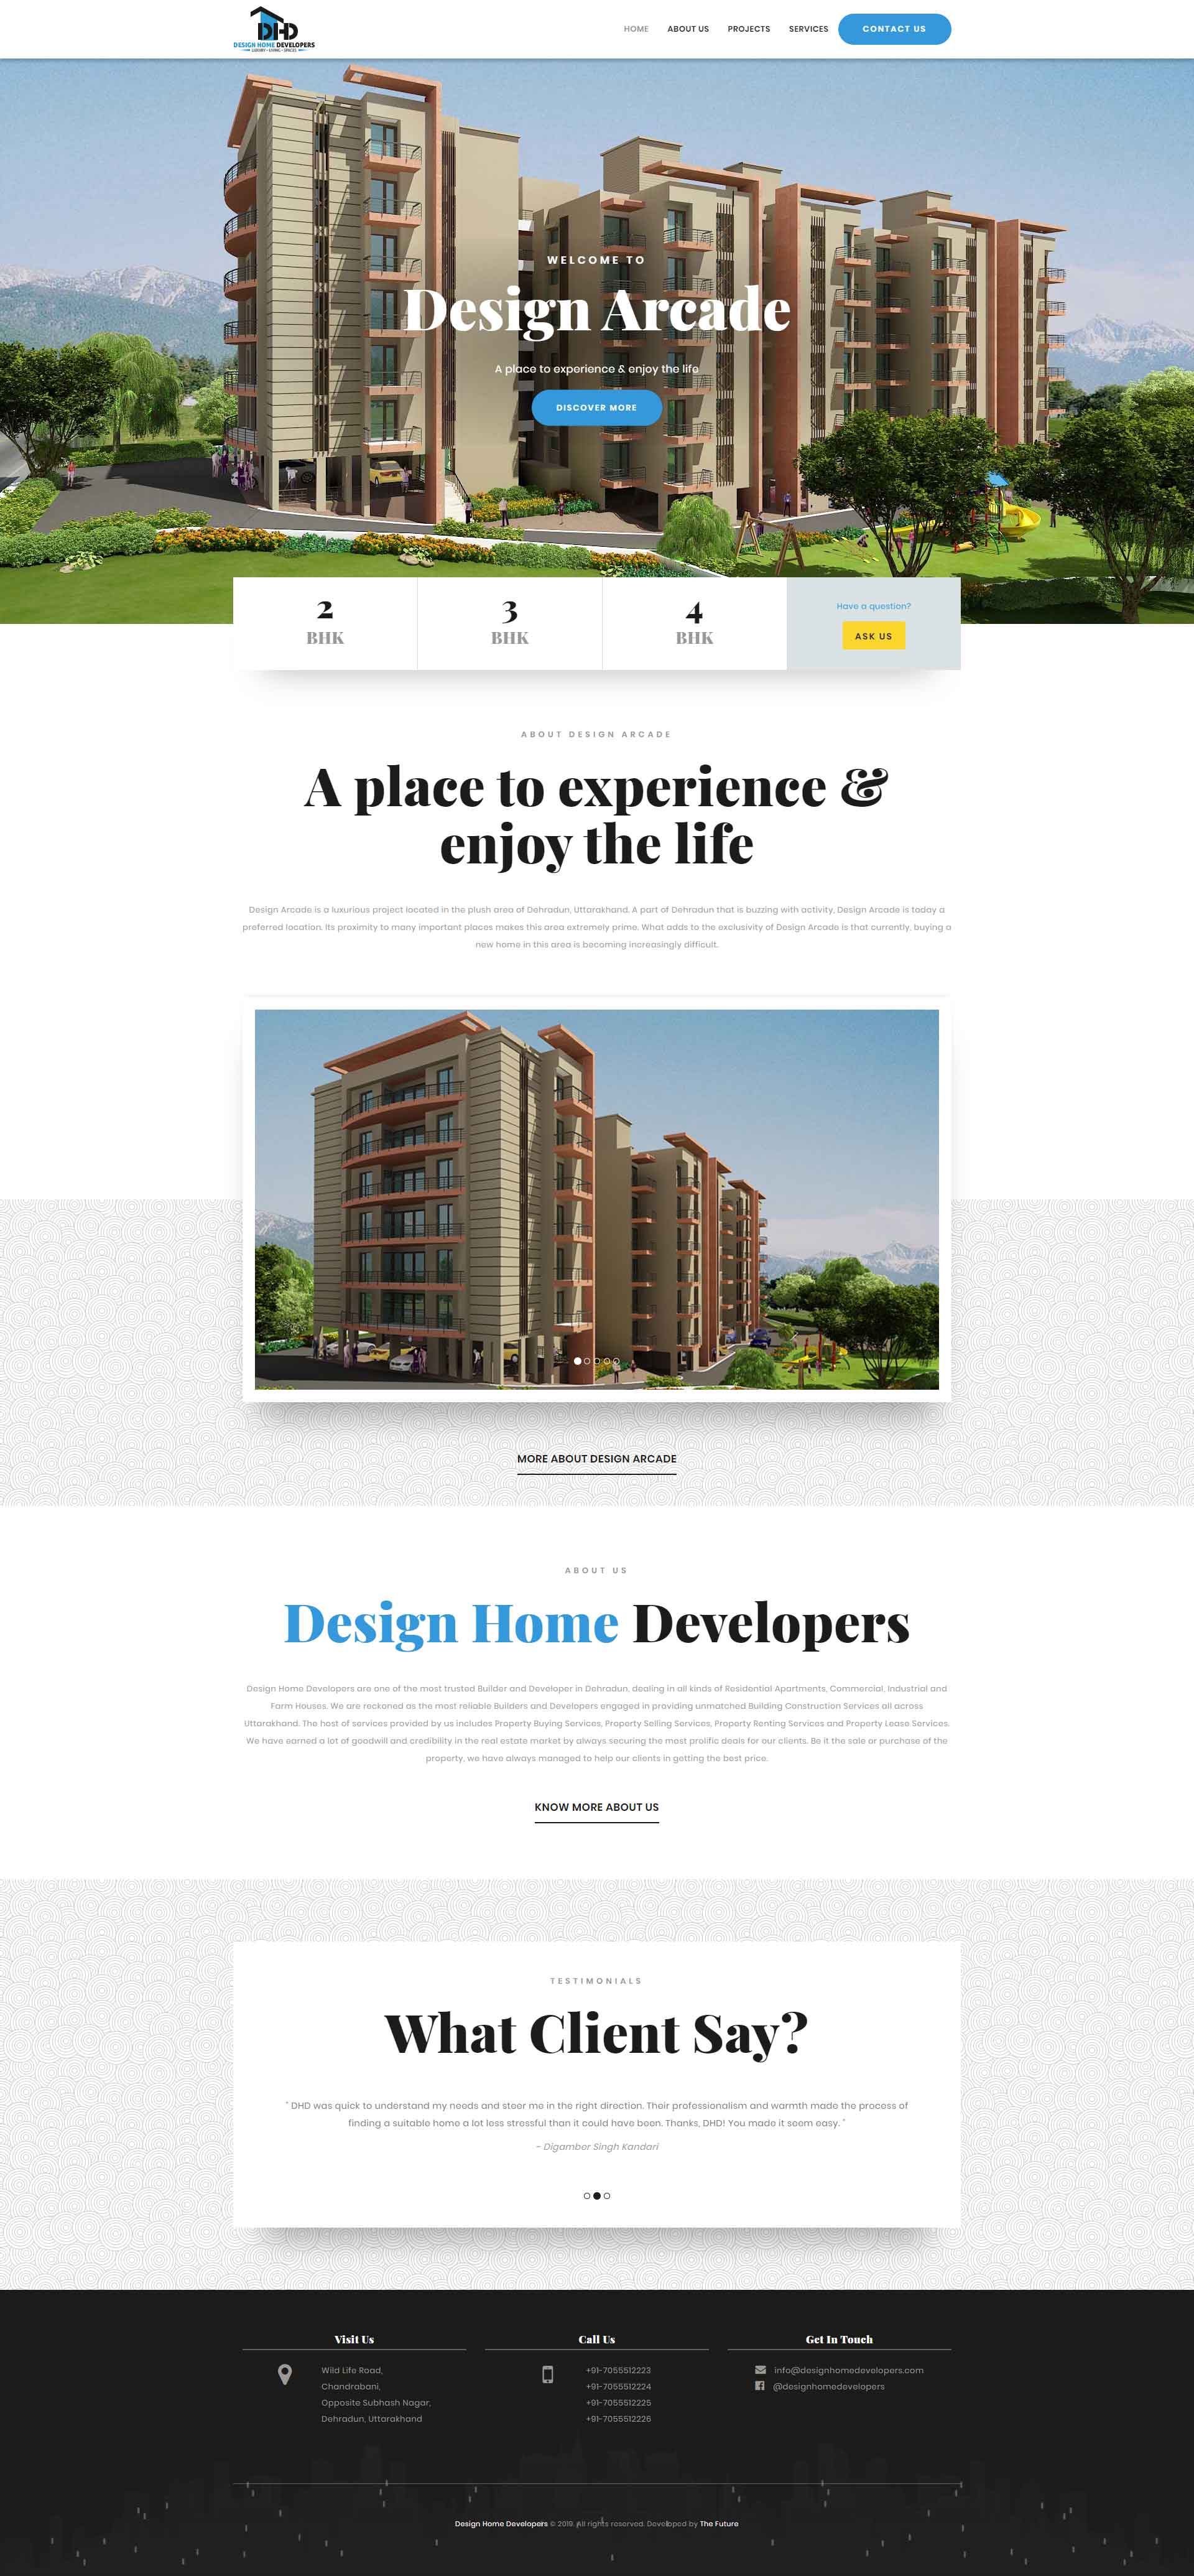 Design Home Developers